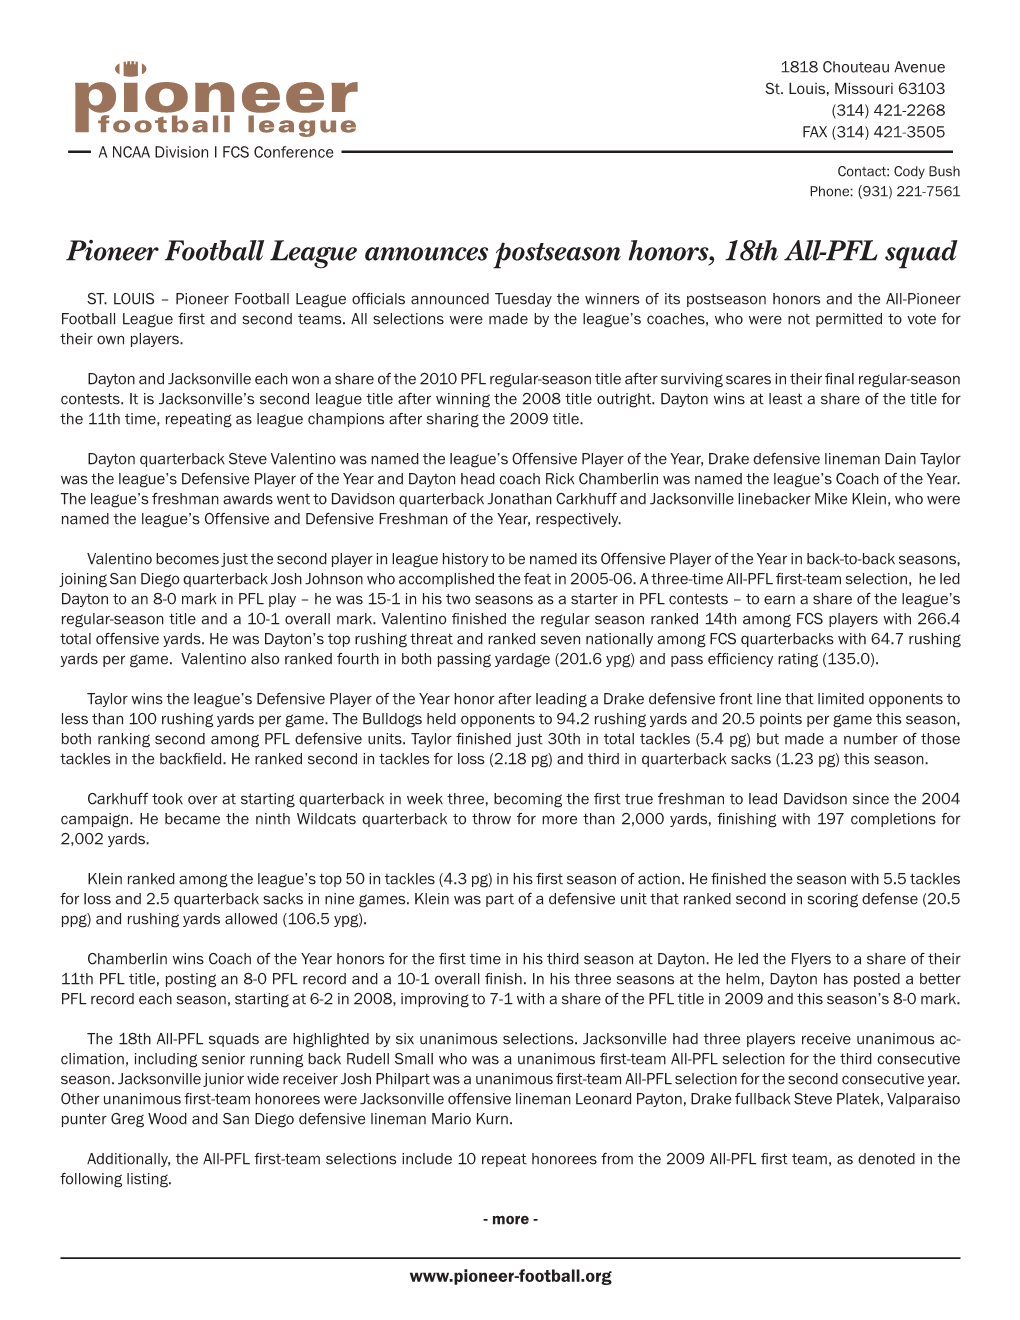 Pioneer Football League Announces Postseason Honors, 18Th All-PFL Squad